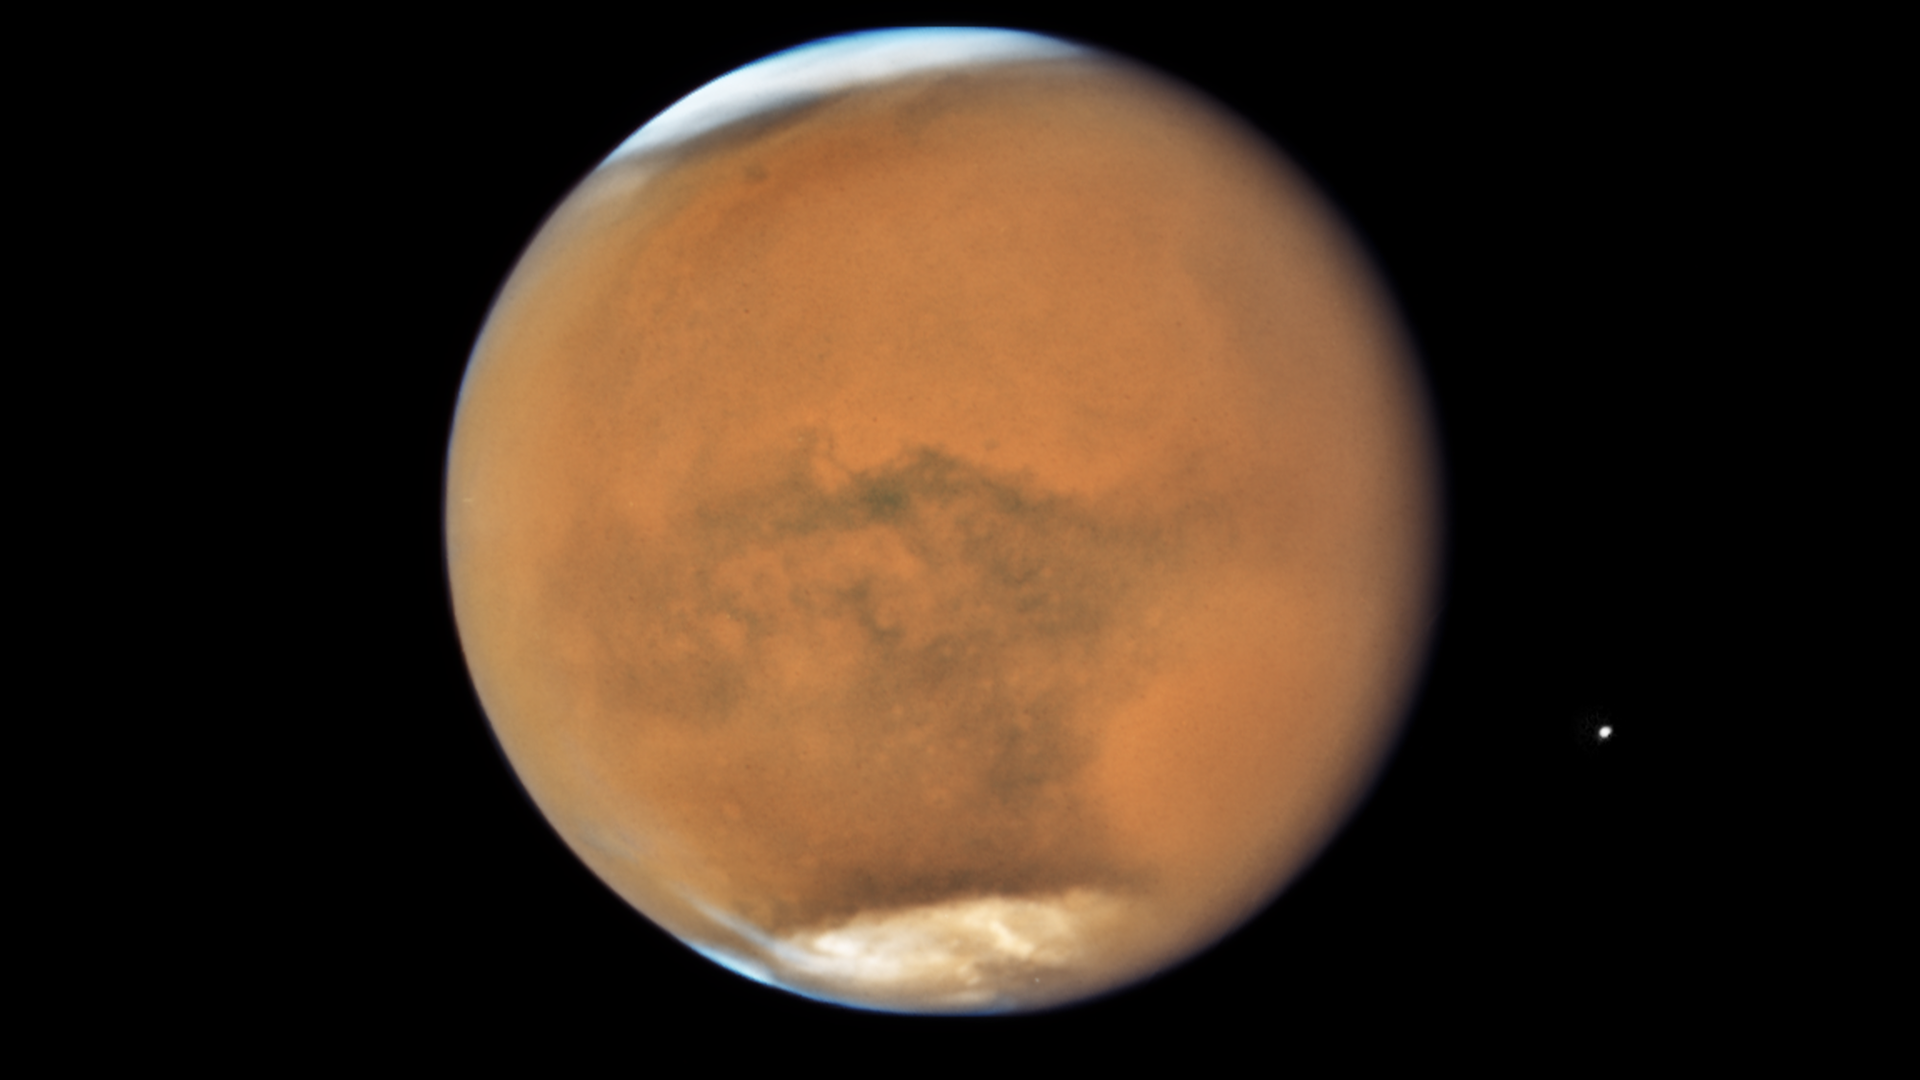 Mars seen by the Hubble Space Telescope. Photo: NASA/ESA/STScI